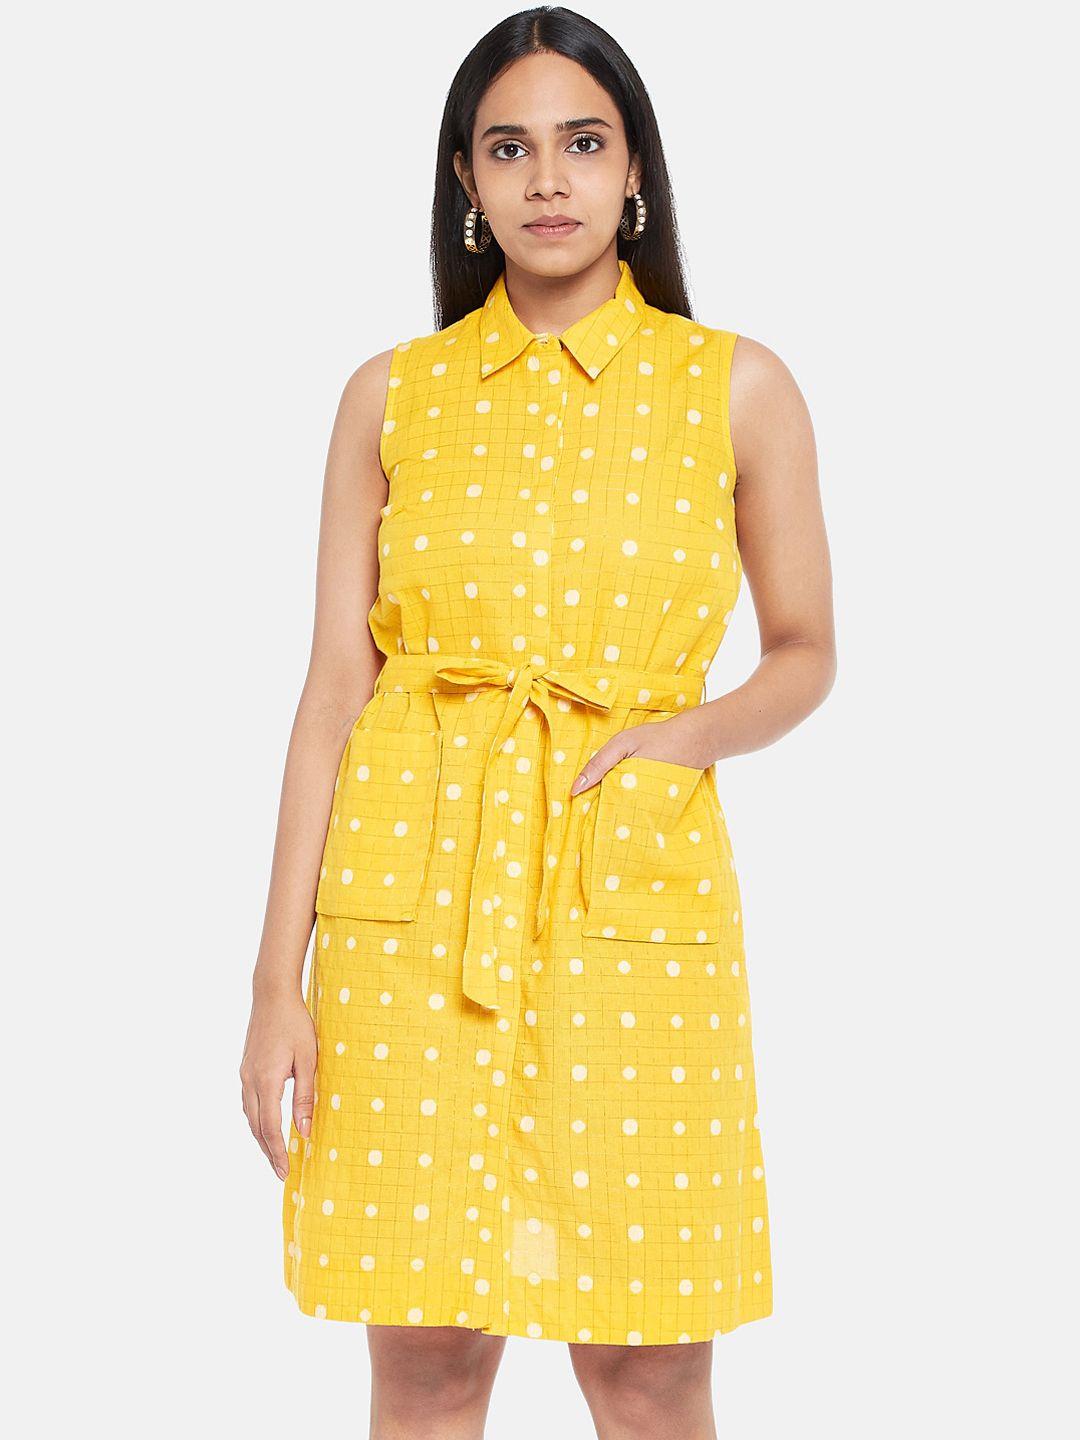 akkriti by pantaloons yellow polka dots shirt dress